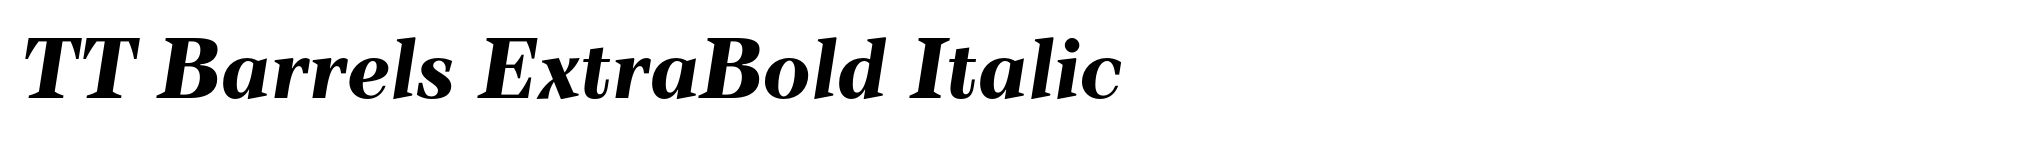 TT Barrels ExtraBold Italic image